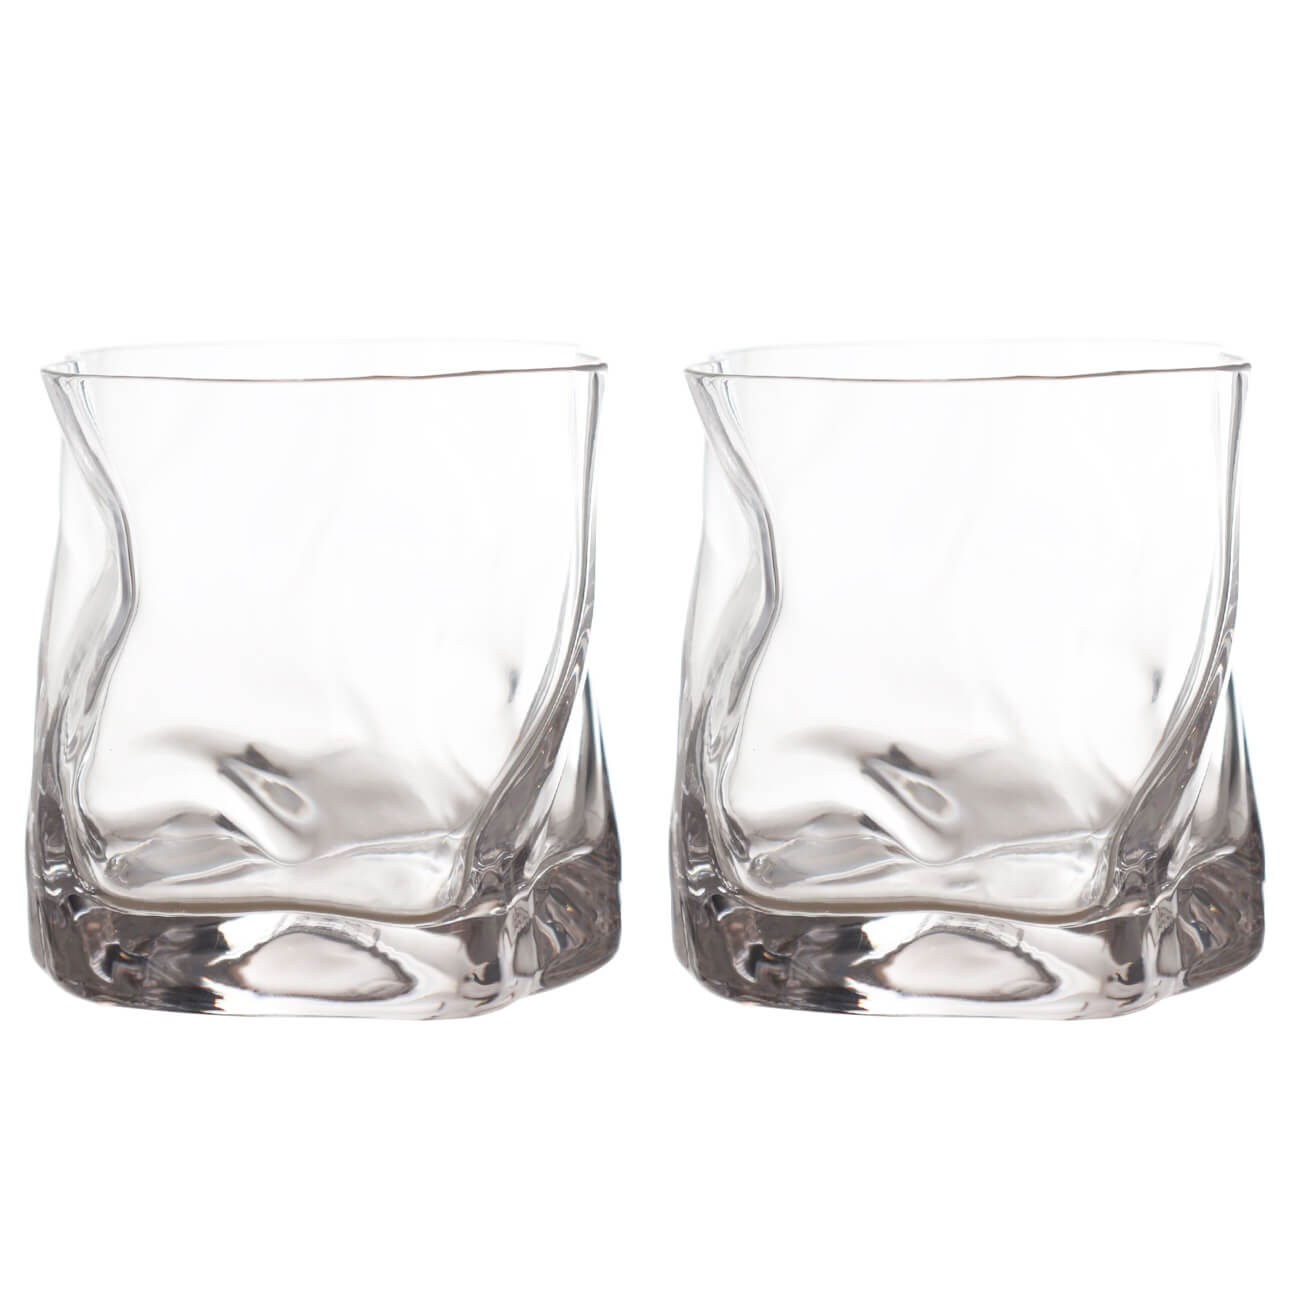 Стакан для виски, 245 мл, 2 шт, стекло, Slalom набор для виски 2 перс 6 пр стаканы кубики стекло стеатит кракелюр ice